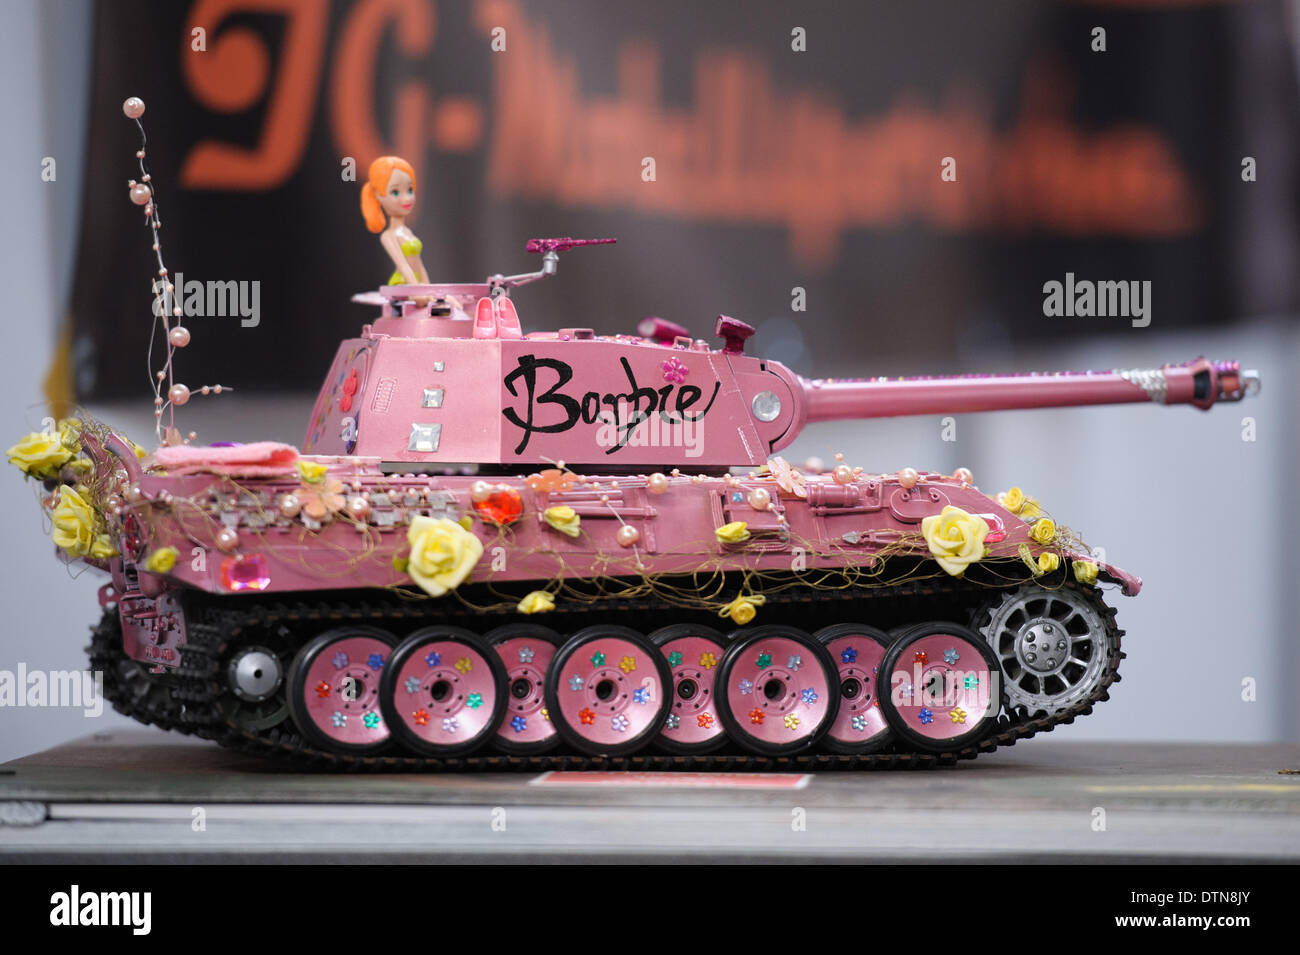 Erfurt, Germany. 21st Feb, 2014. A model of a pink tank lettered 'Barbie'  at the model making trade fair 'Erlebniswelt Modellbau - Modellbau, Spiel &  Unterhaltung' in Erfurt, Germany, 21 February 2014.